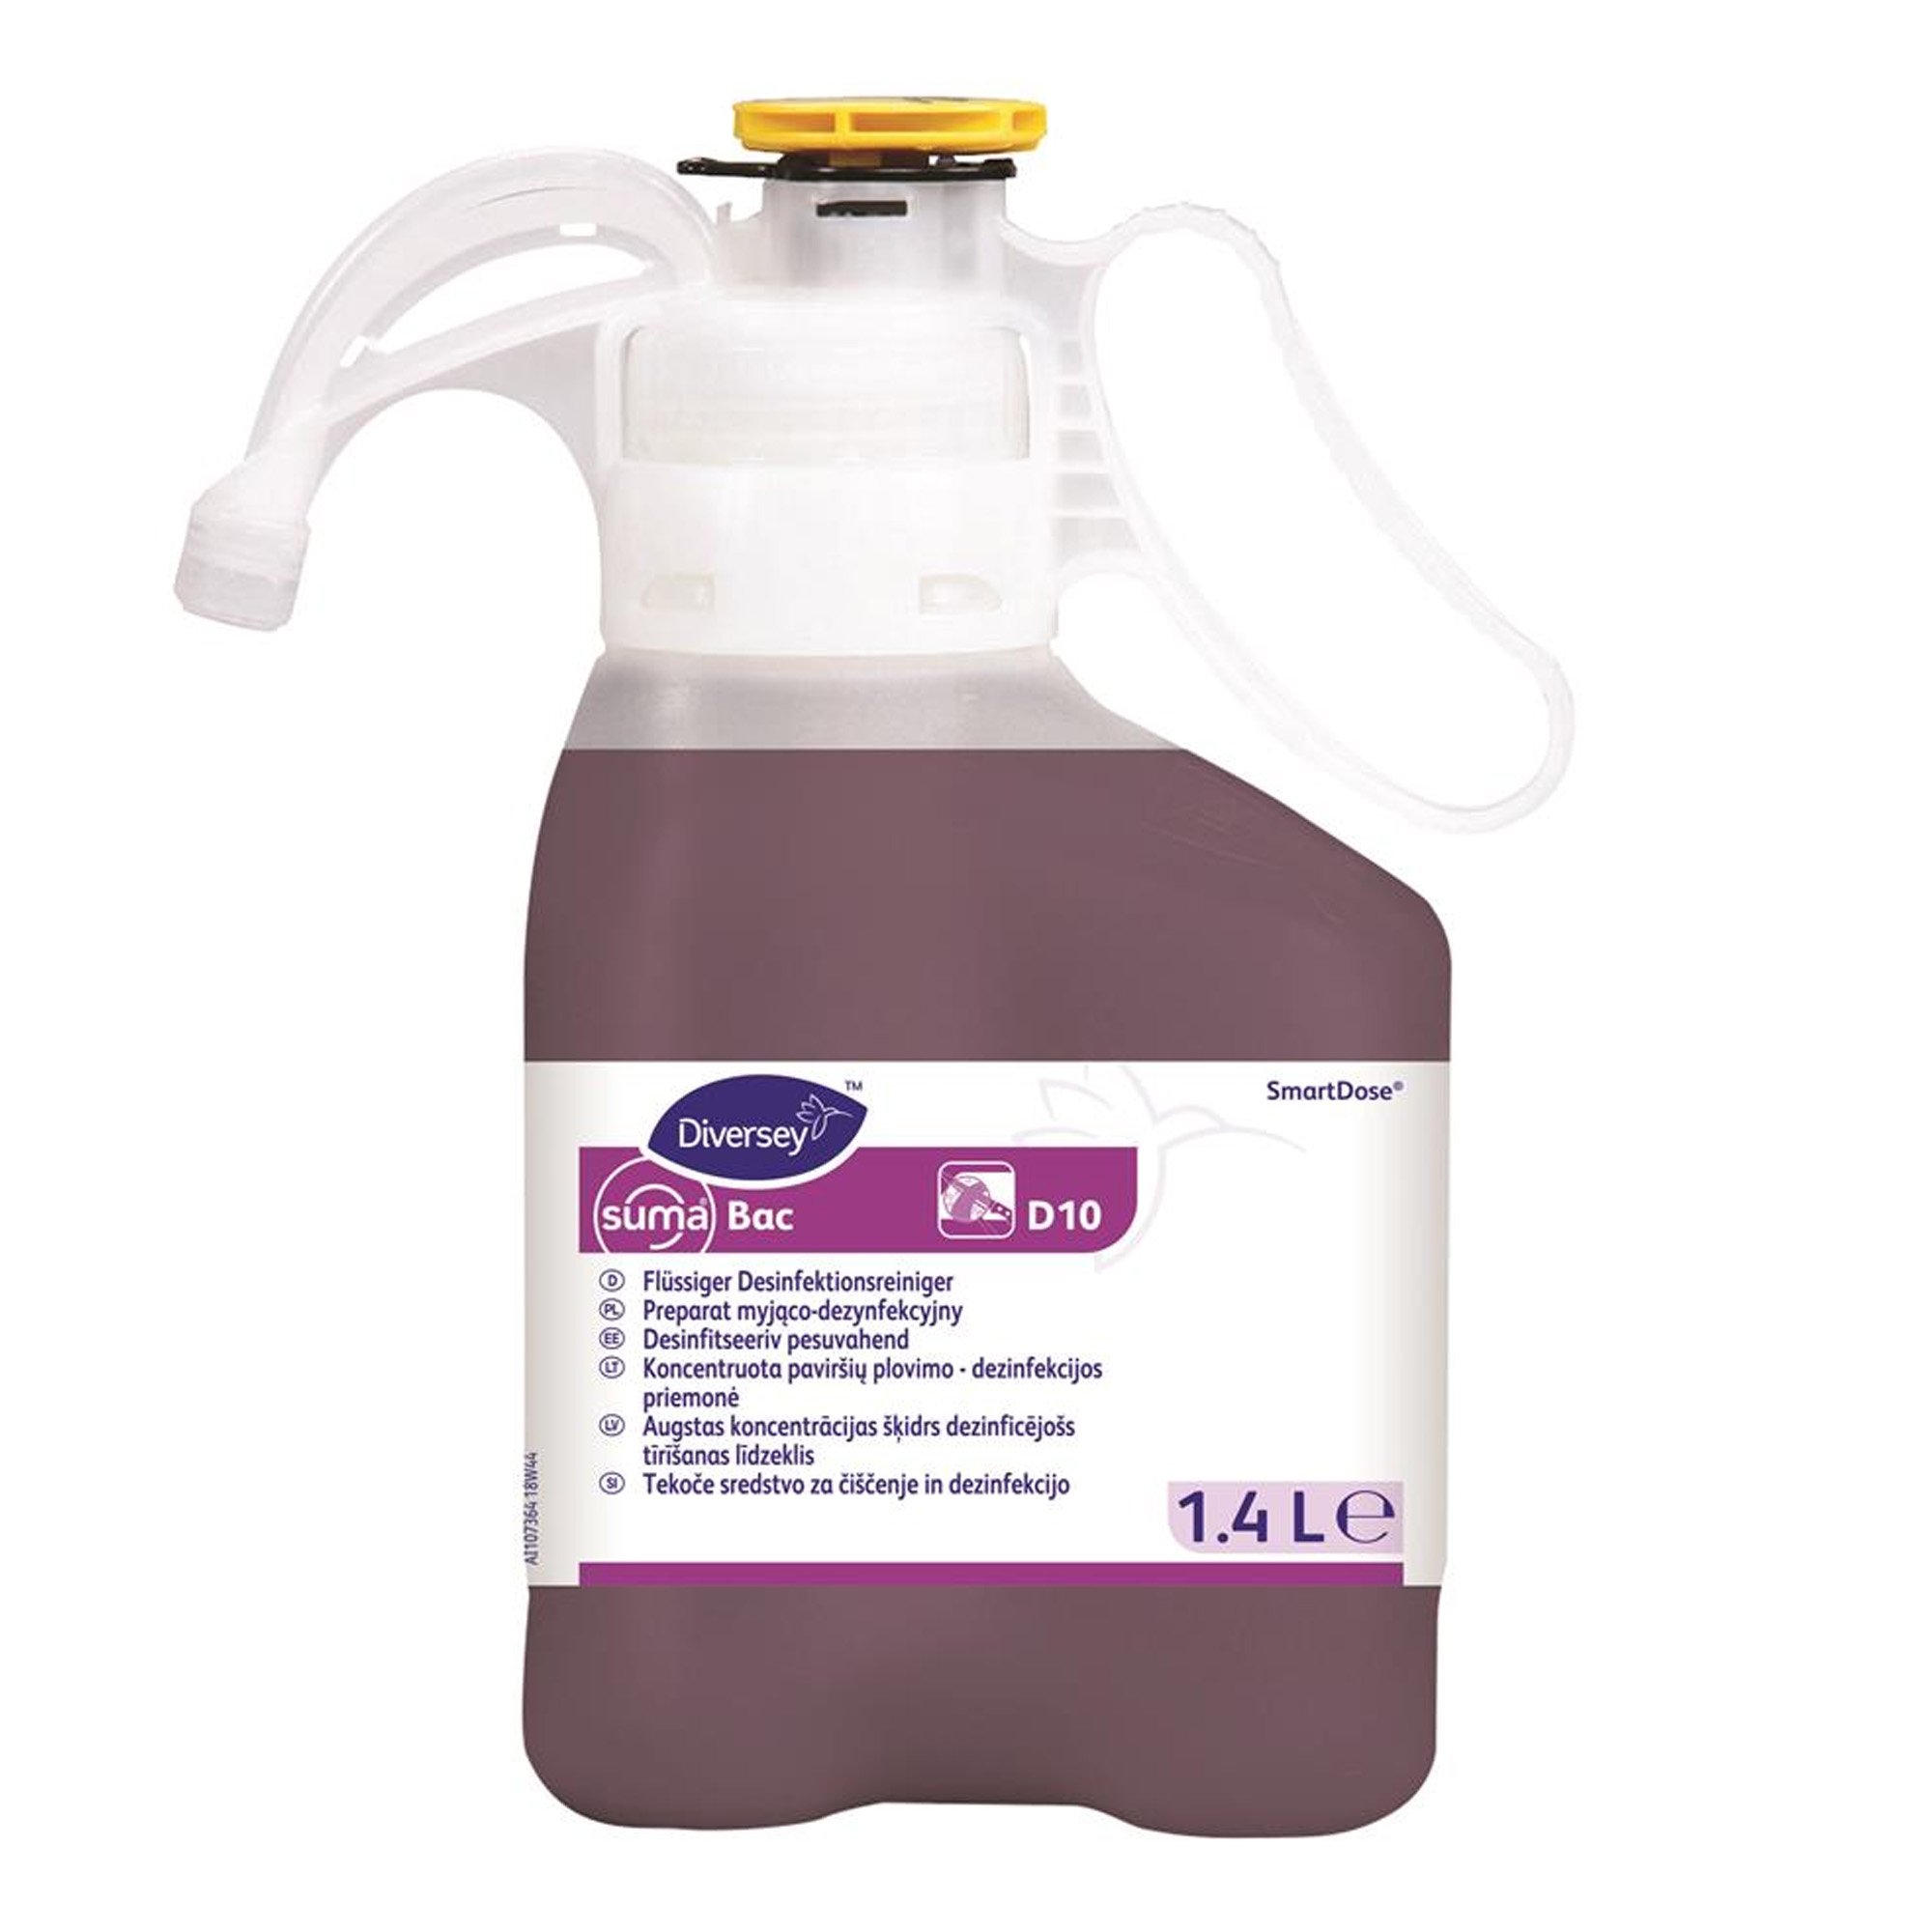 Suma Bac D10 SD flüssiger Desinfektionsreiniger Konzentrat 1,4 Liter SmartDose 7517204_1